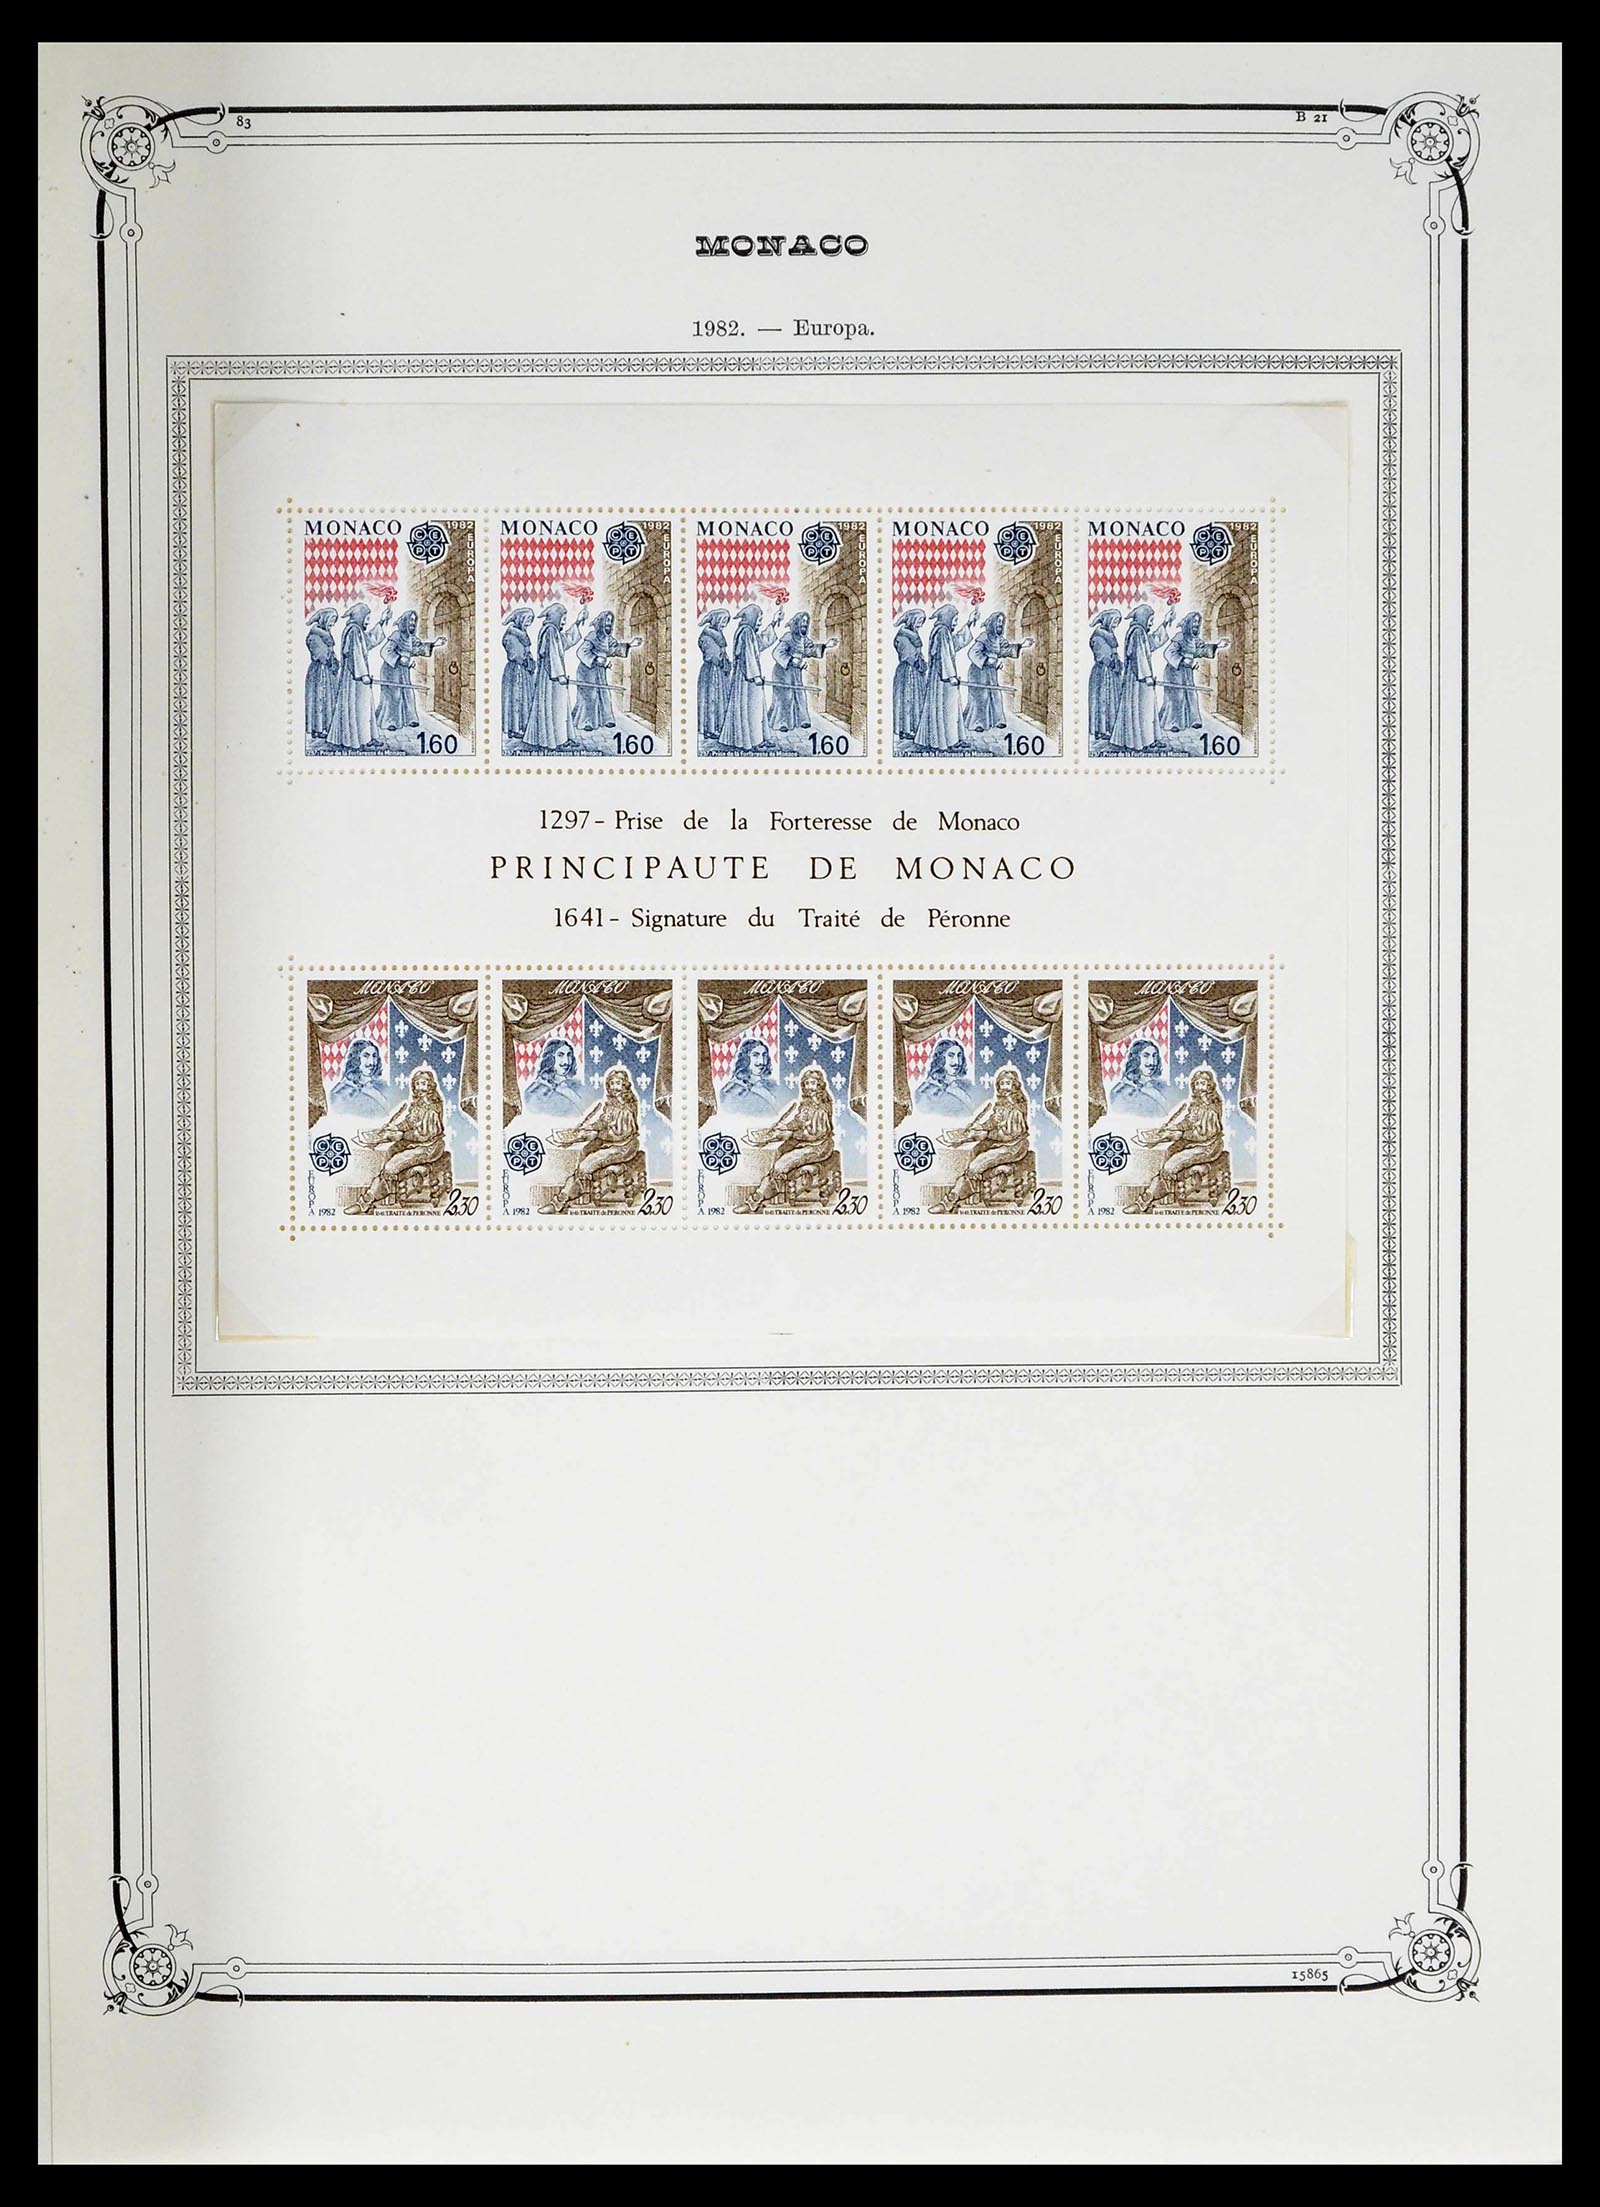 39133 0215 - Stamp collection 39133 Monaco 1885-1996.